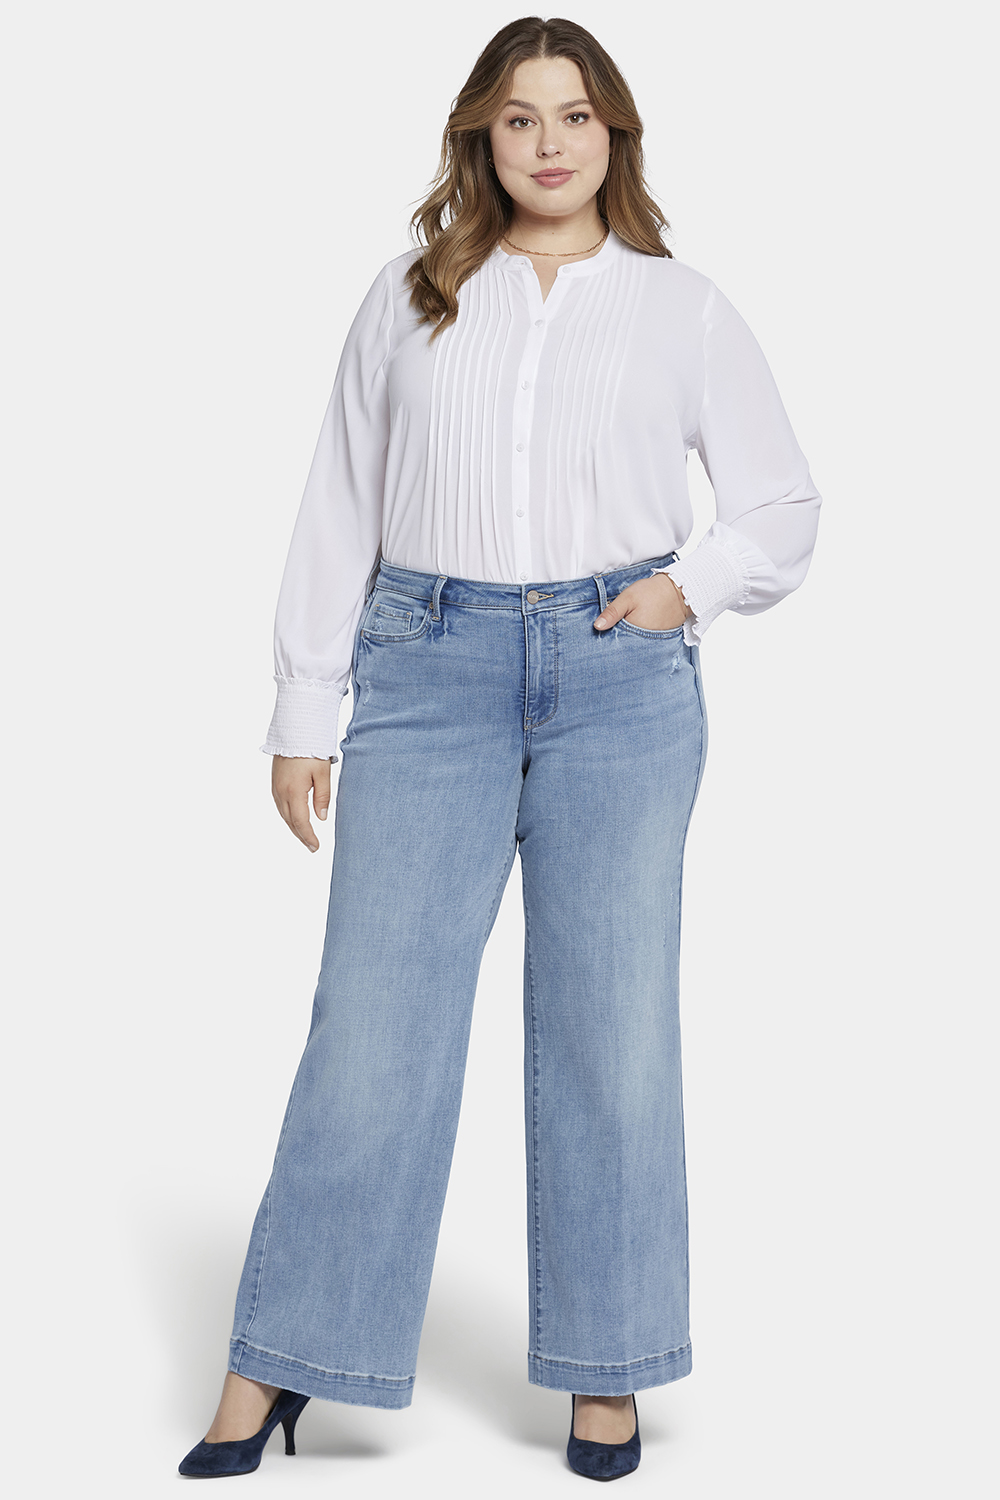 Women's Plus Size Jeans - Straight, Wide Leg & Skinny | NYDJ